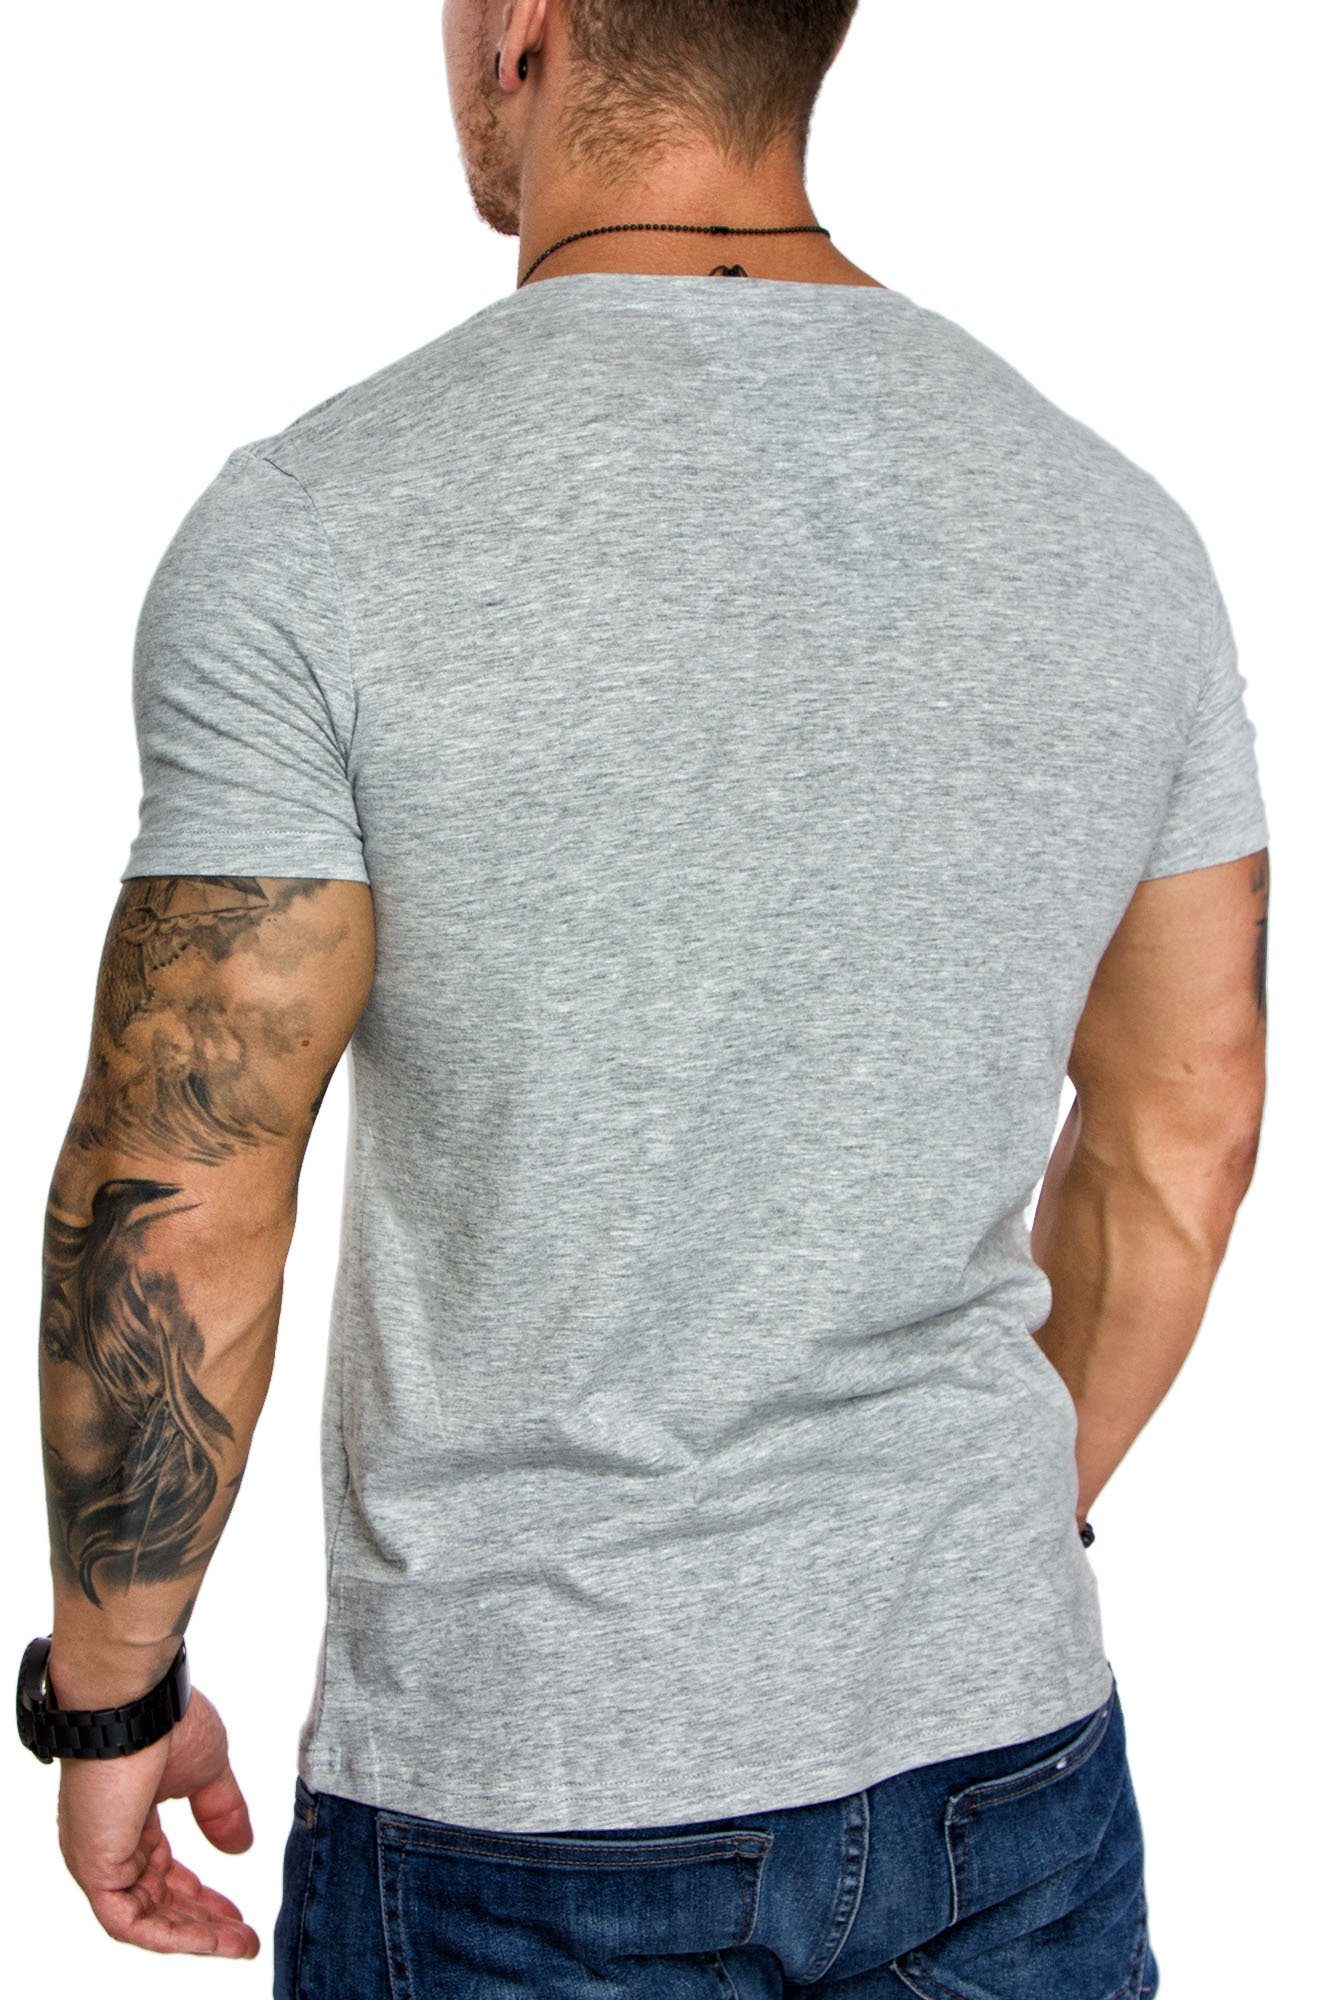 Melange Herren V-Neck T-Shirt Vintage Einfarbig V-Ausschnitt Basic Grau Basic EUGENE Shirt mit T-Shirt Amaci&Sons V-Ausschnitt